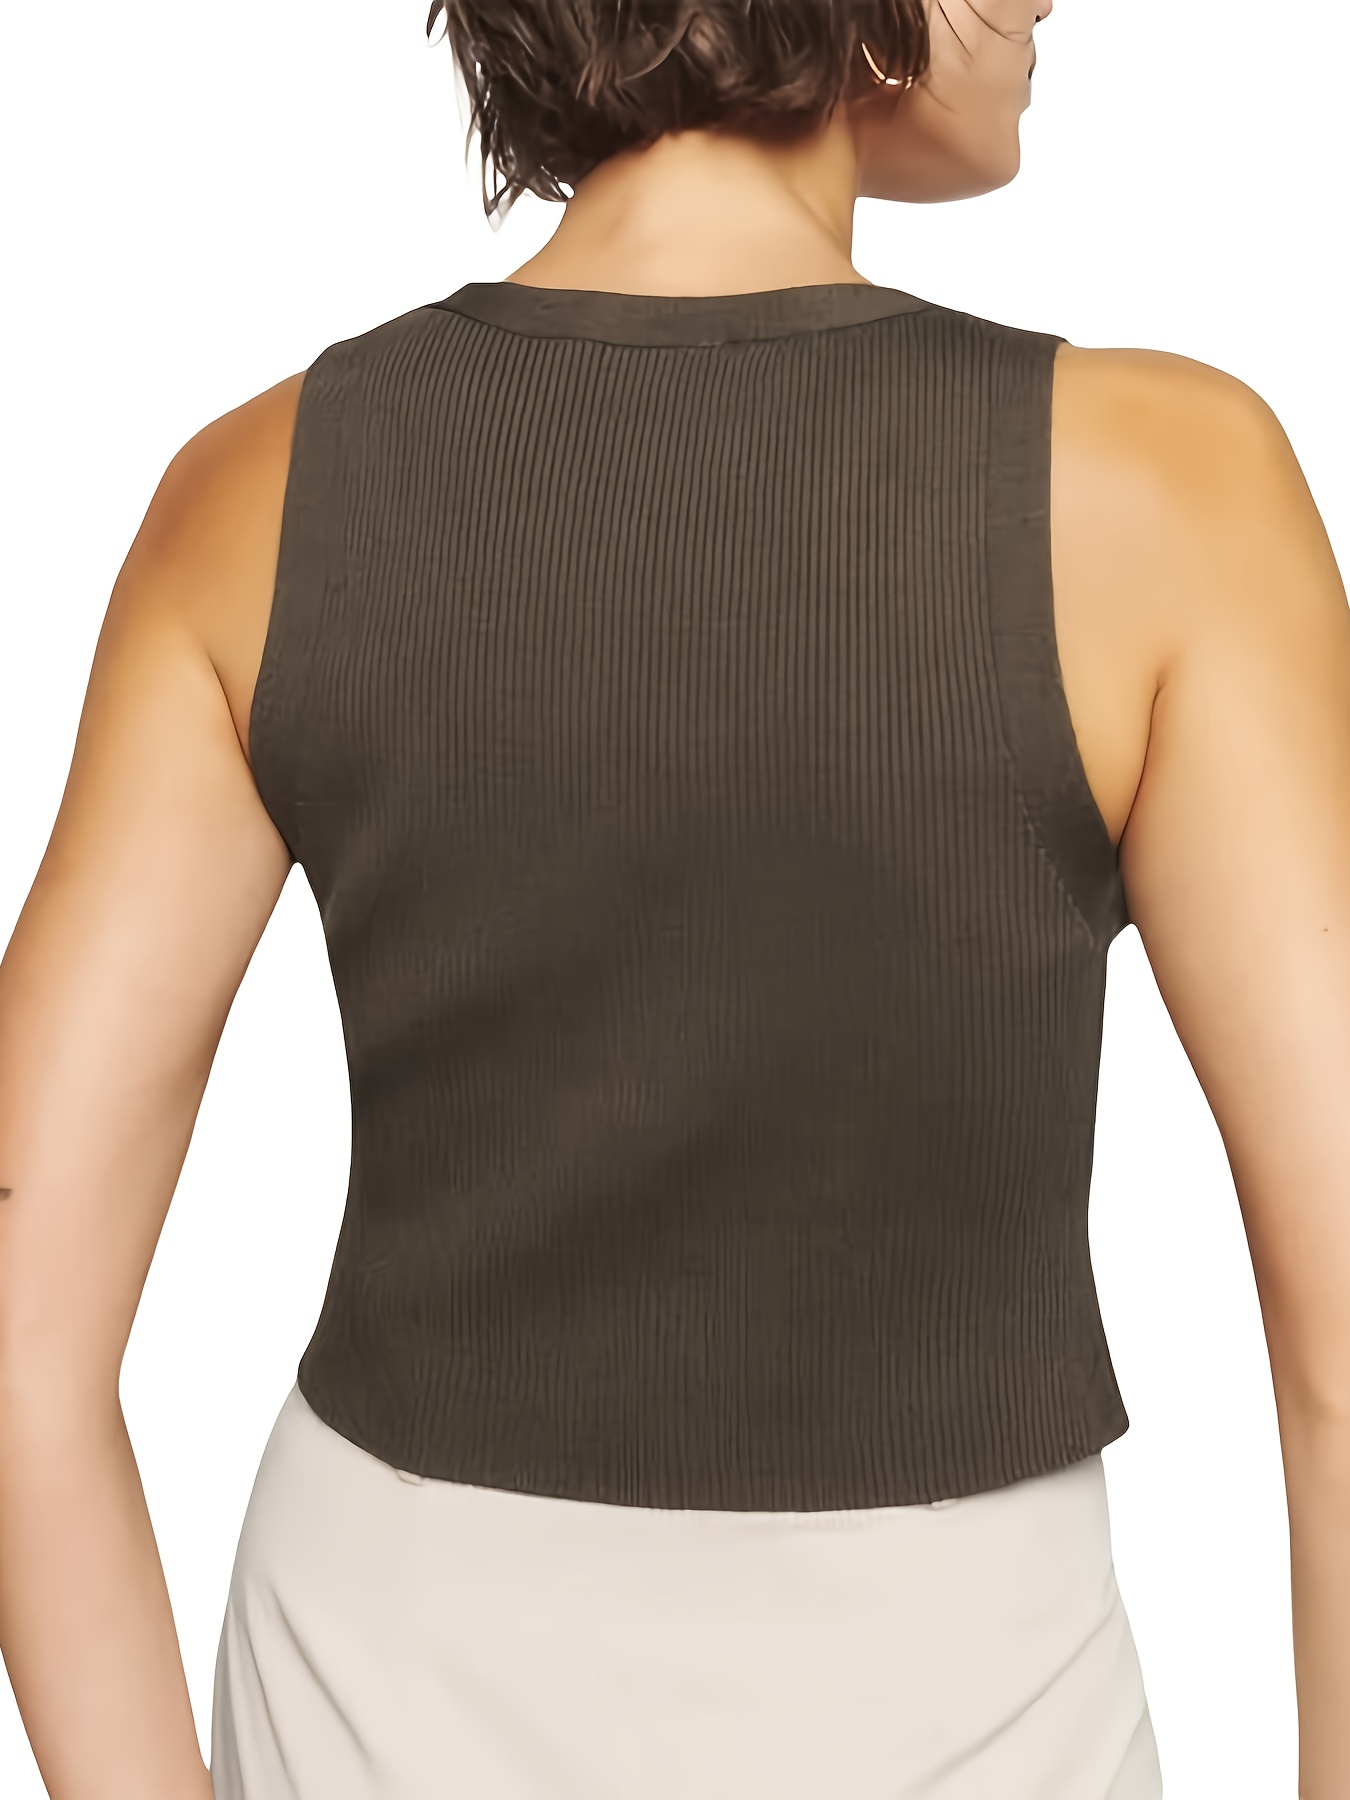 Crop Sweater Vest - Dark brown - Ladies